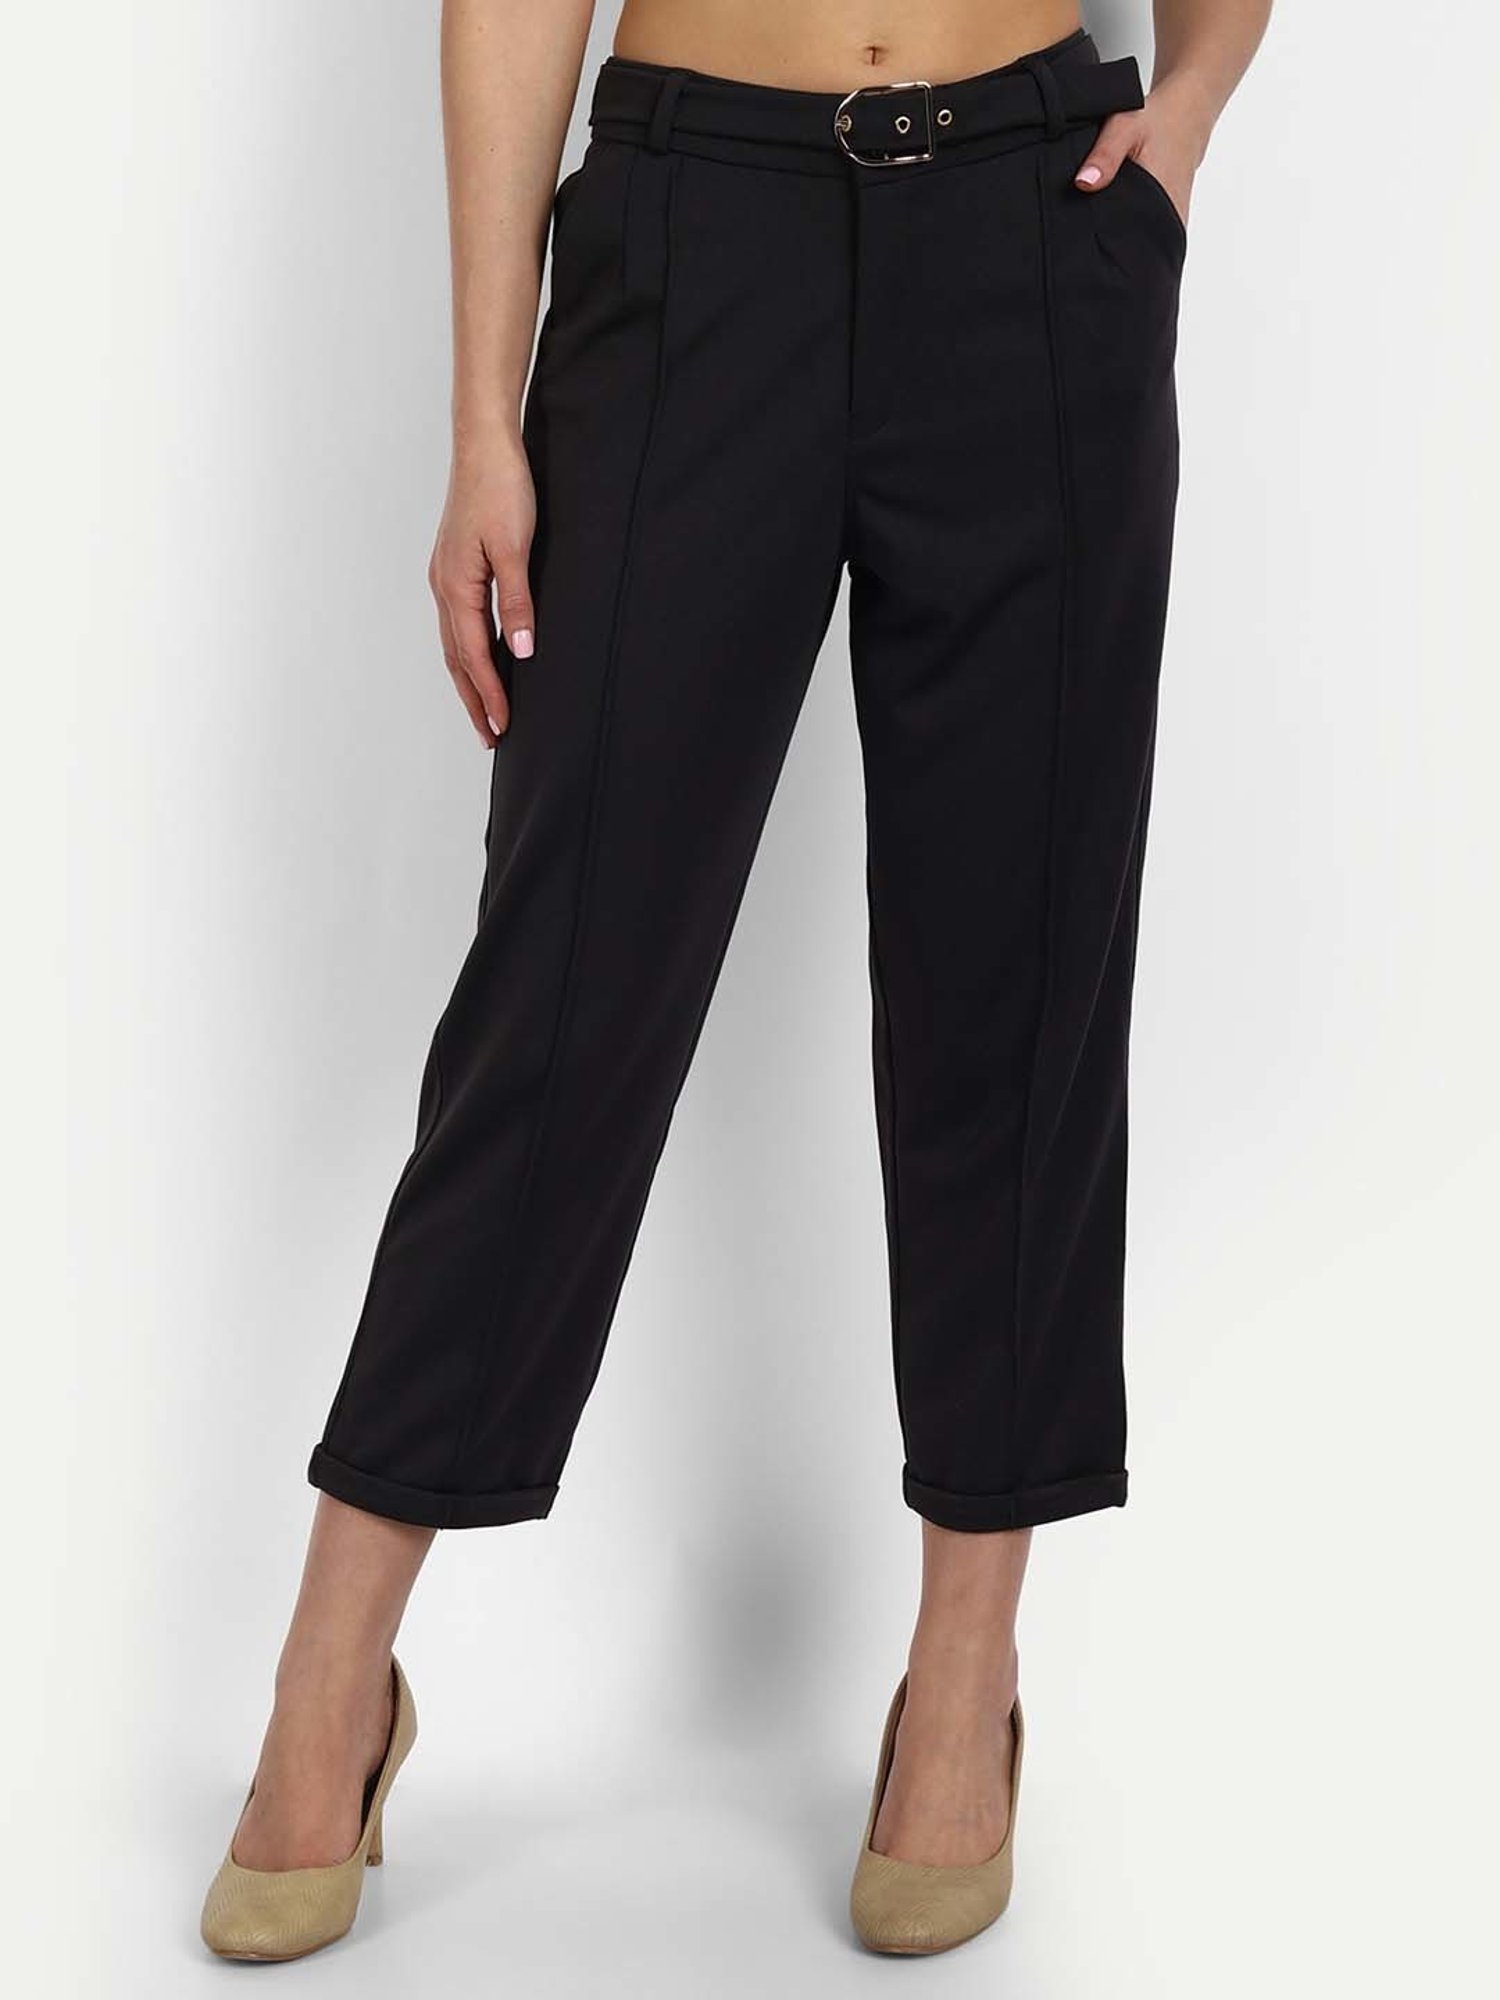 Buy Black Trousers  Pants for Women by ORCHID BLUES Online  Ajiocom